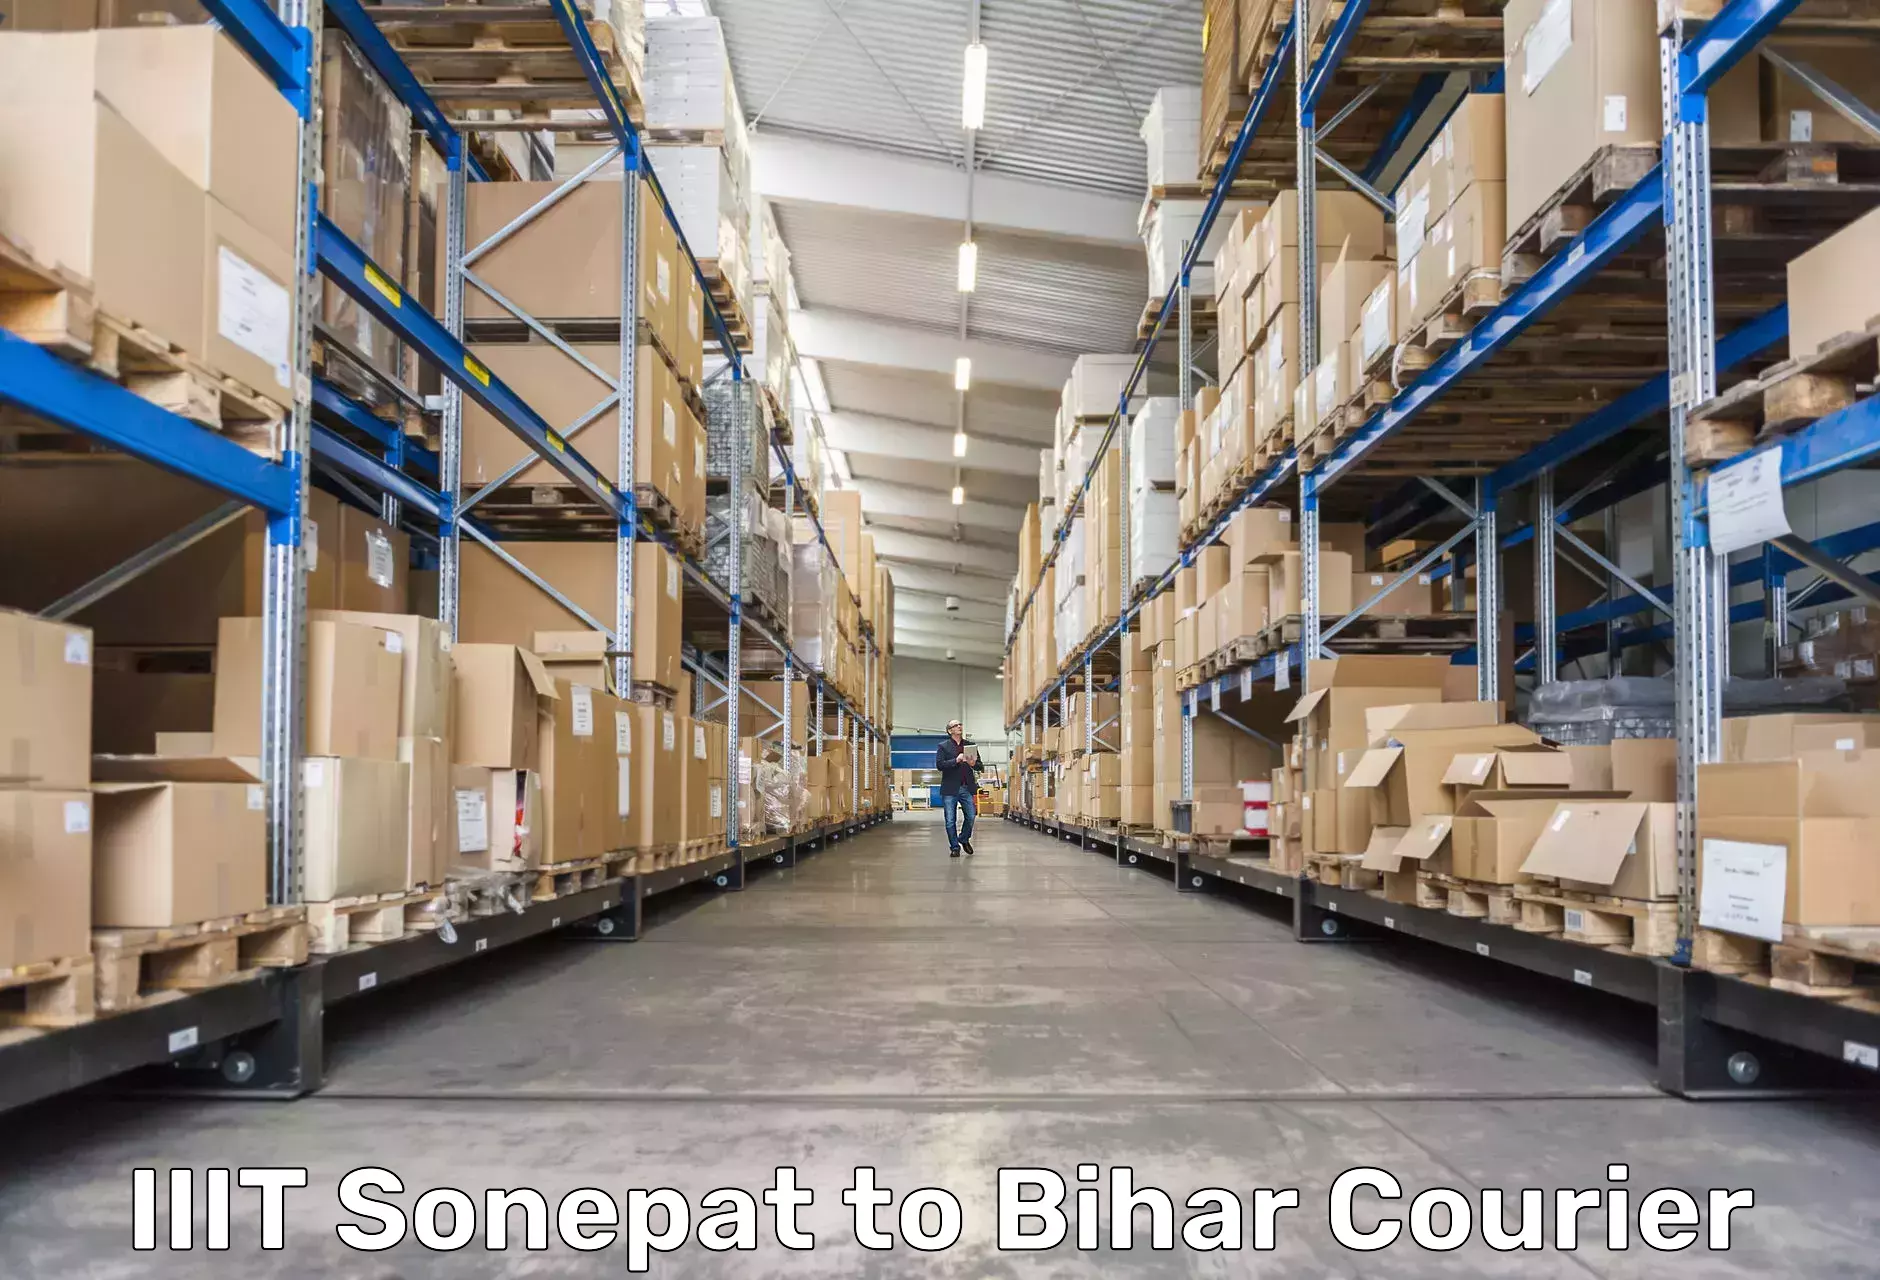 Courier service comparison IIIT Sonepat to Chainpur